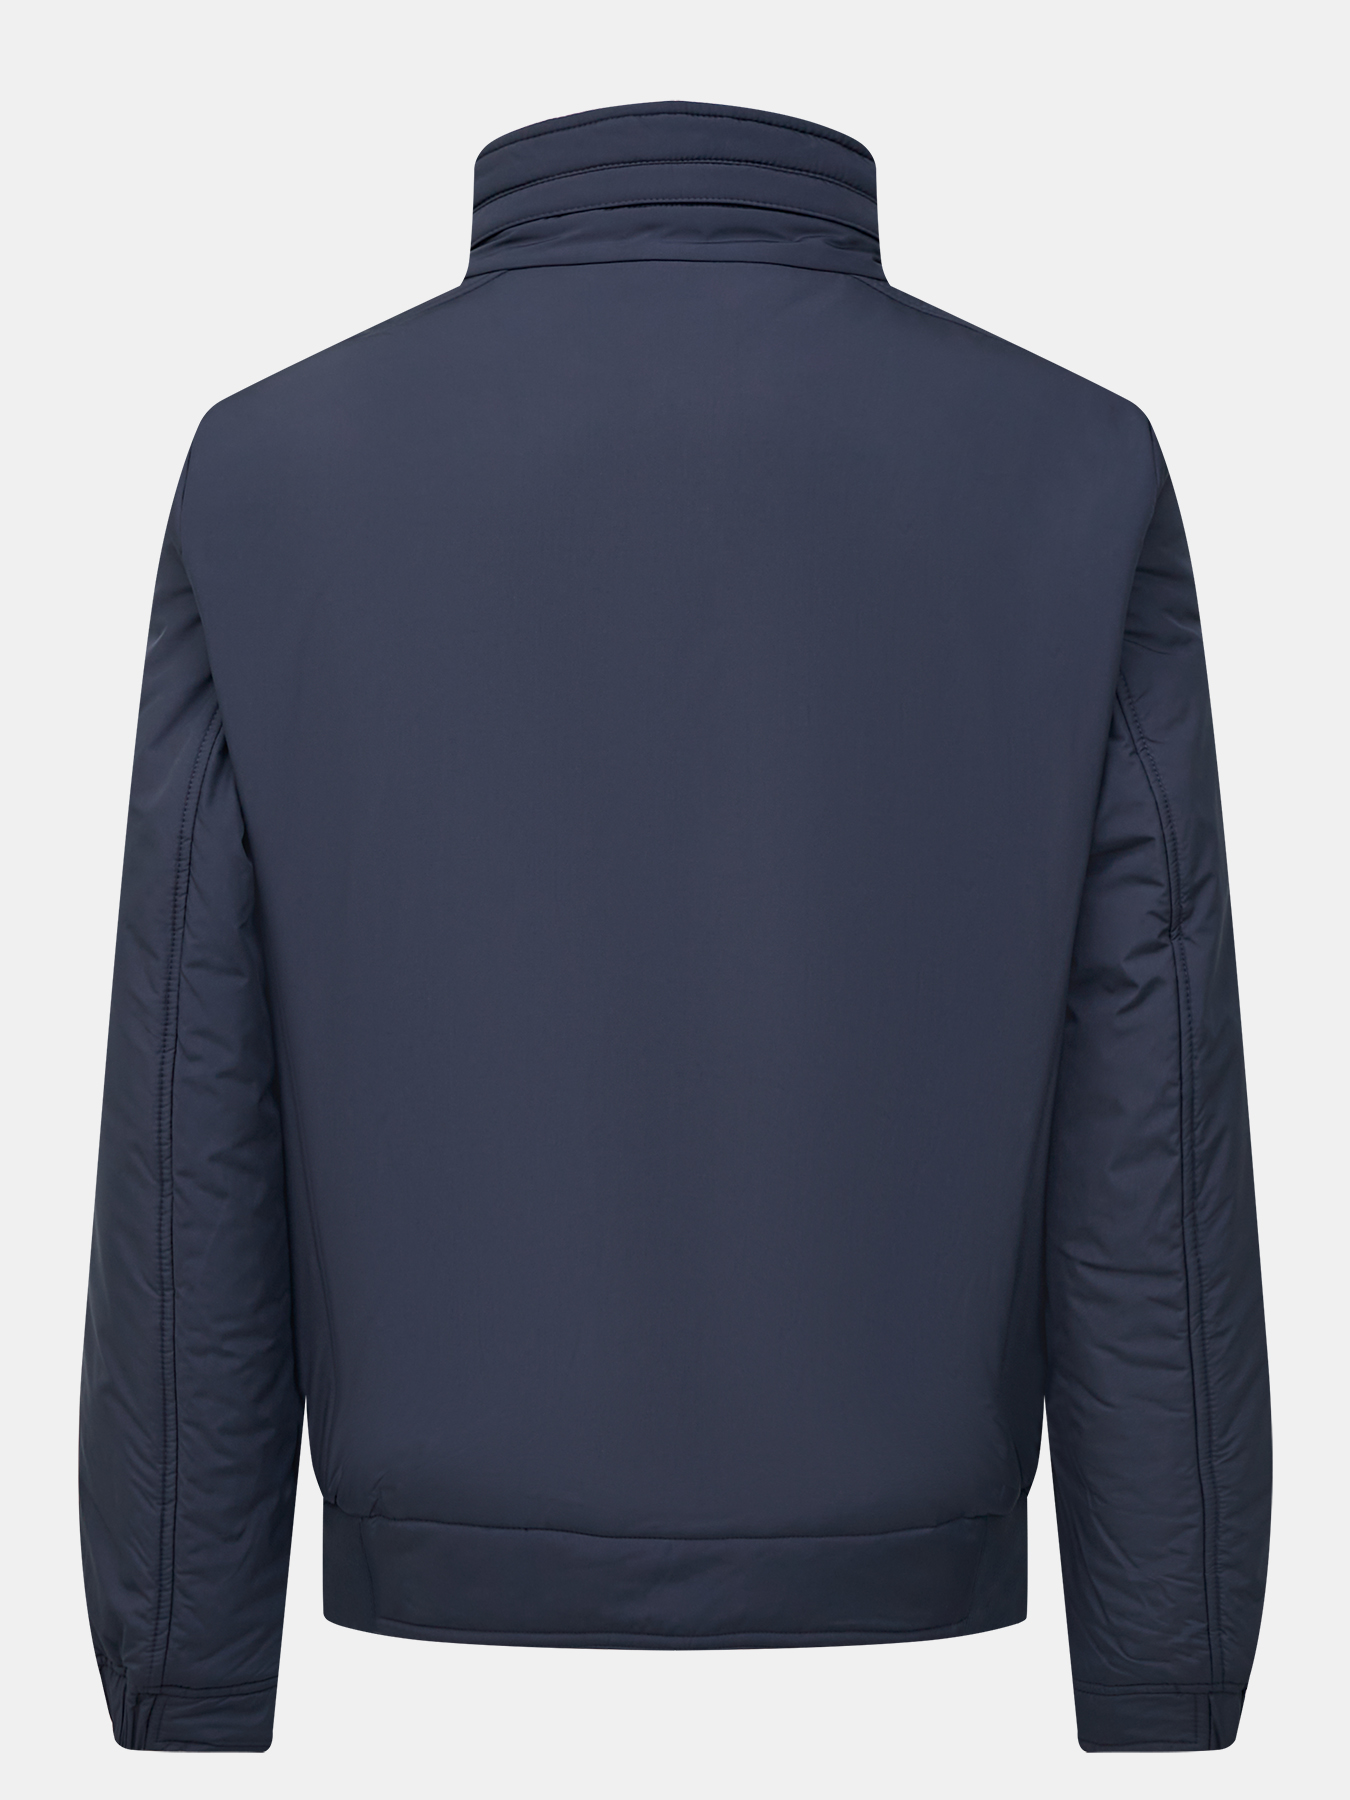 Куртка Ritter 367555-025, цвет синий, размер 48 - фото 5